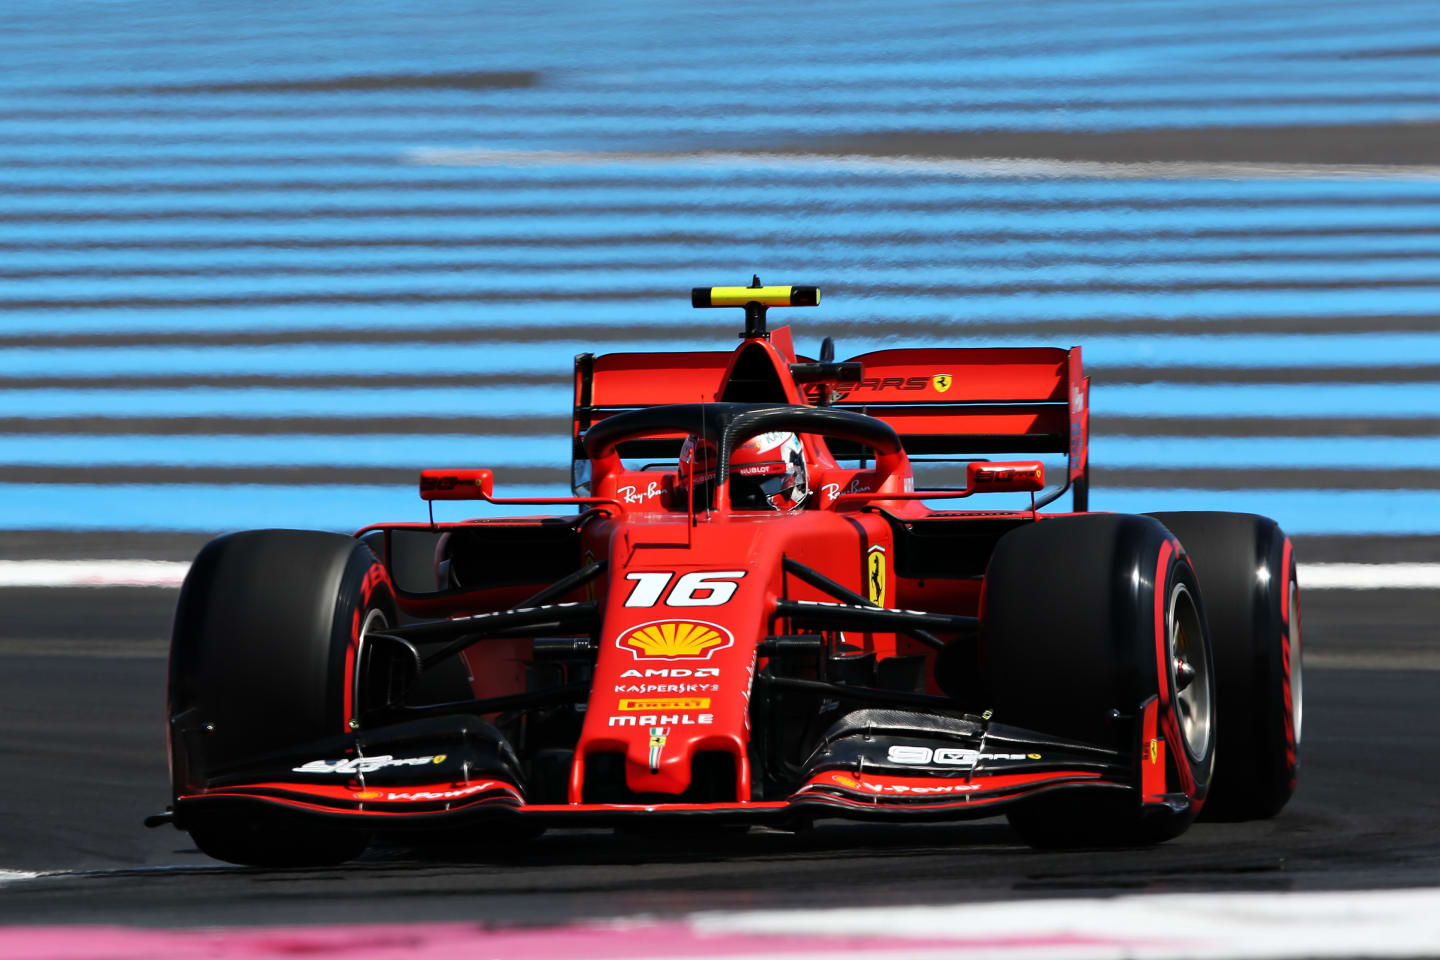 LE CASTELLET, FRANCE - JUNE 21: Charles Leclerc of Monaco driving the (16) Scuderia Ferrari SF90 on